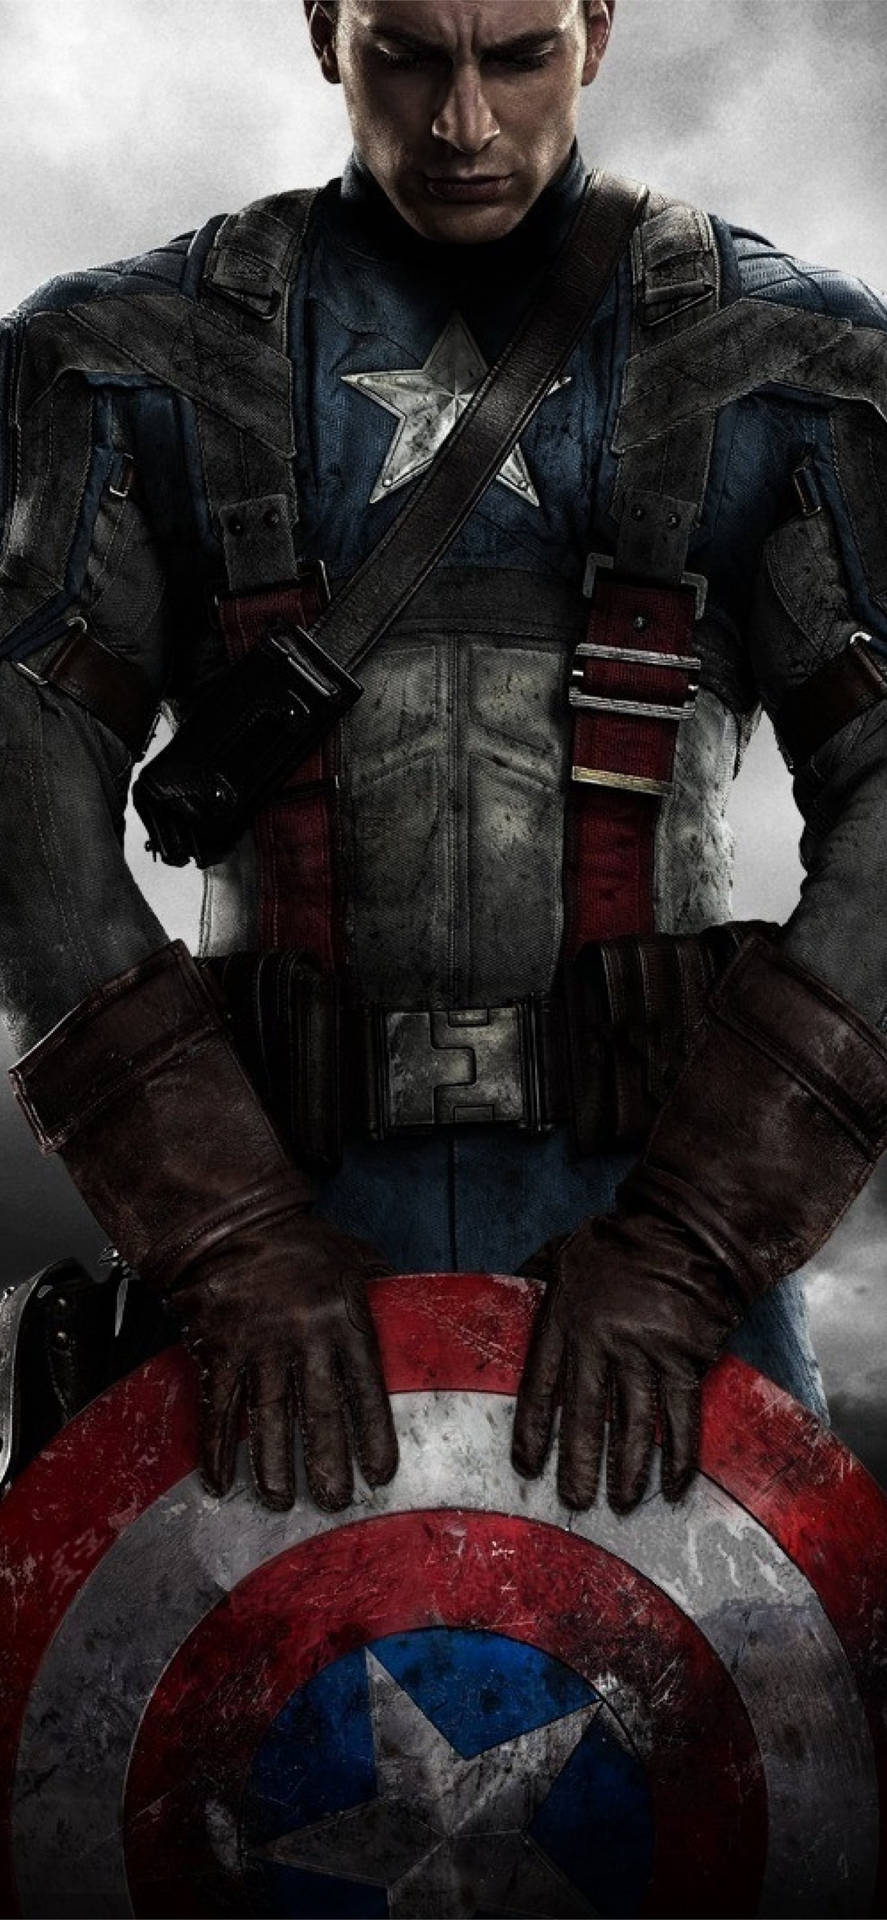 Captain America The Winter Soldier  Chris Evans as Captain America 2K  wallpaper download